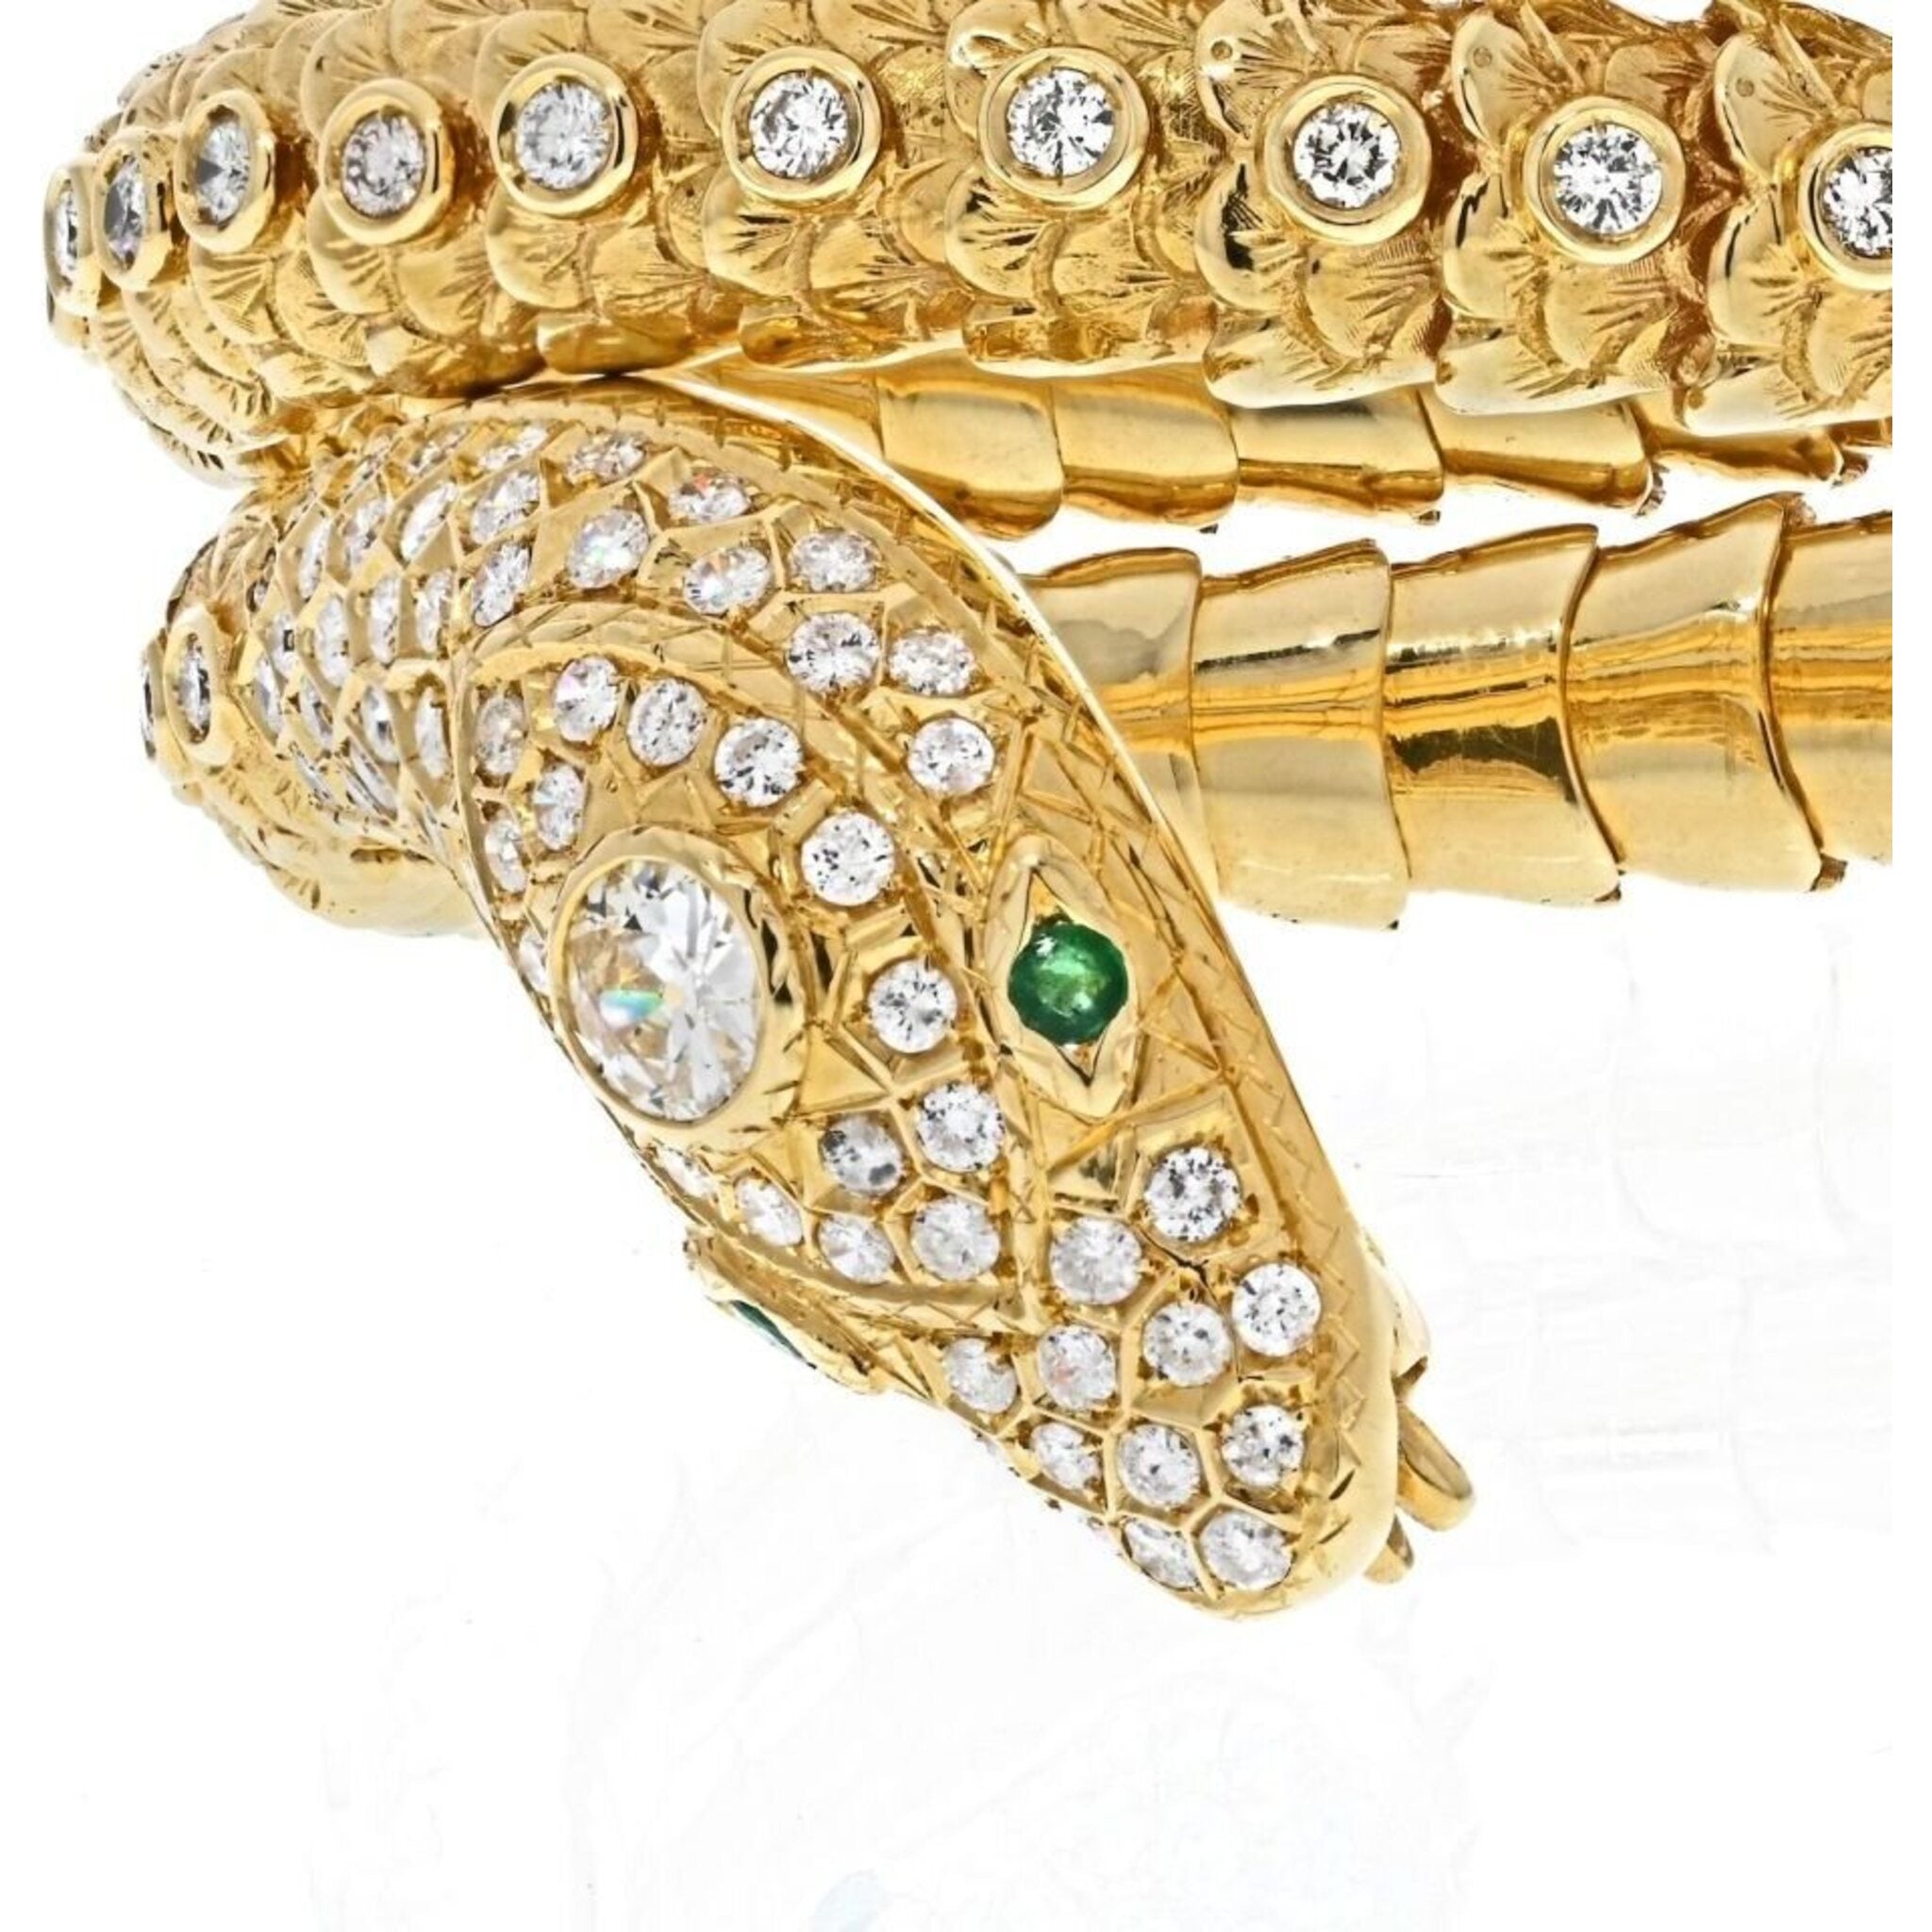 Buy White Gold Bracelets With Diamond For Men And Women Online |